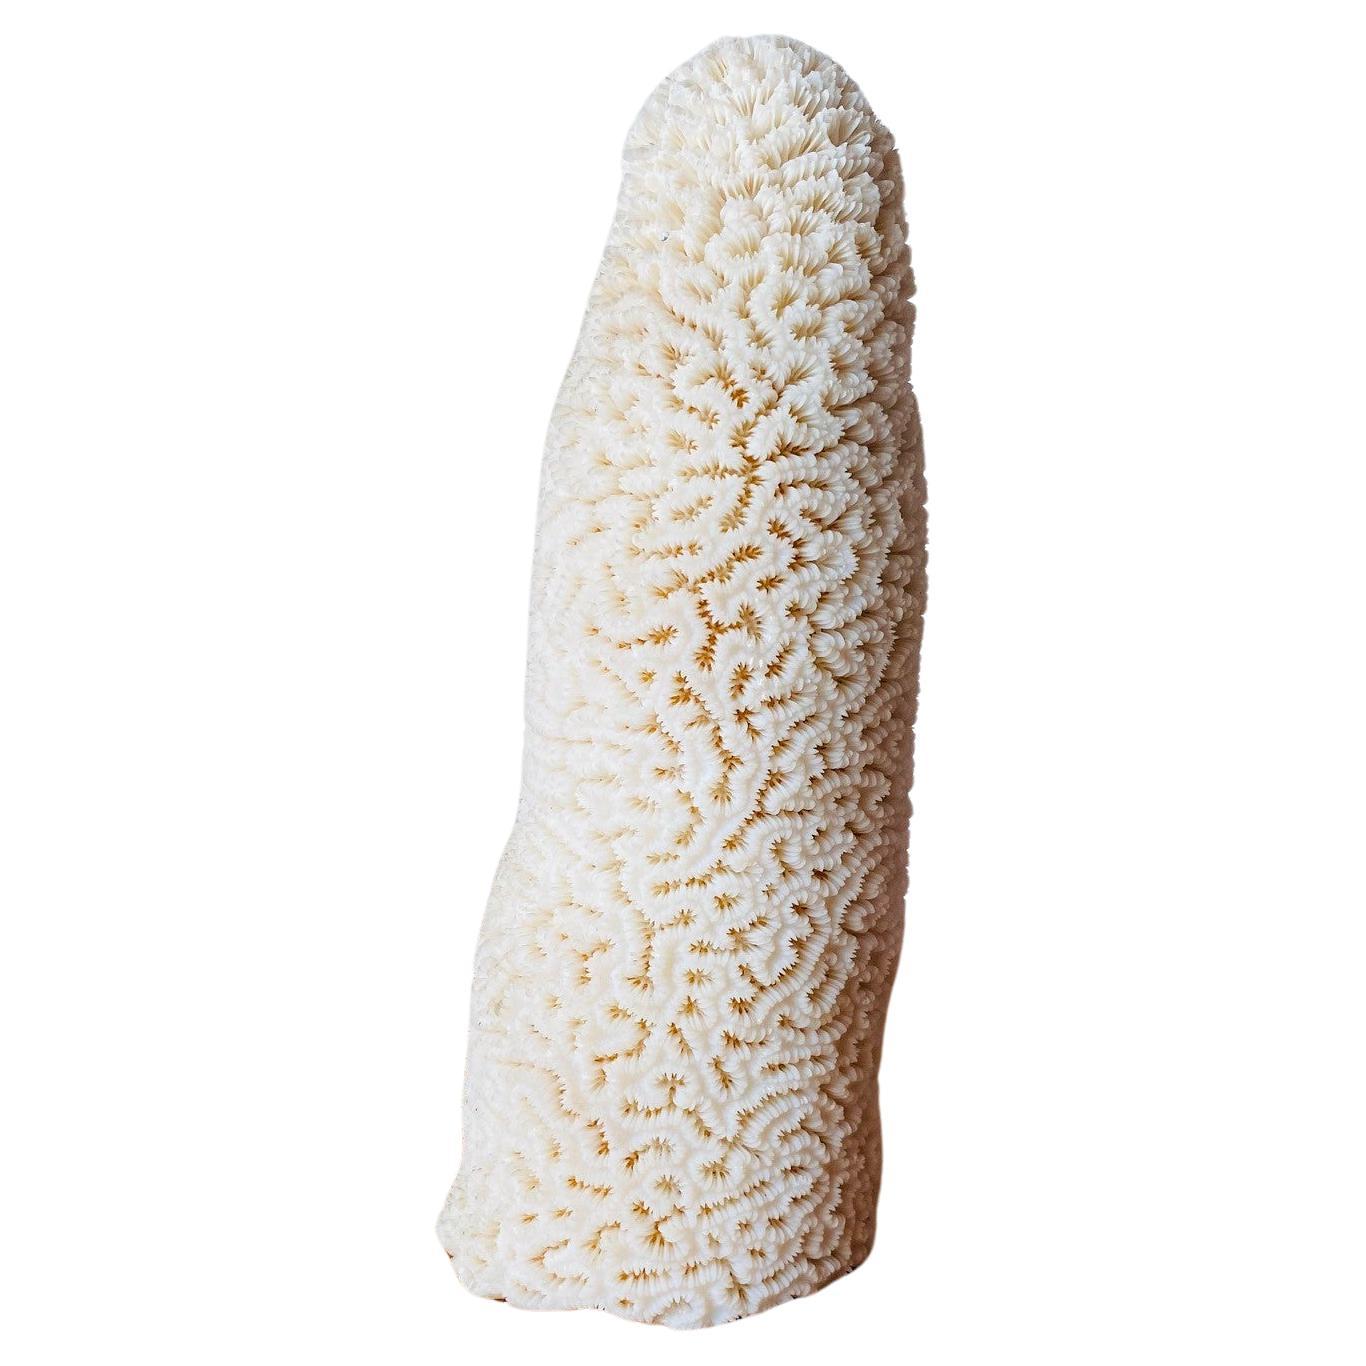 Sculptural Natural White Sea Coral Specimen For Sale